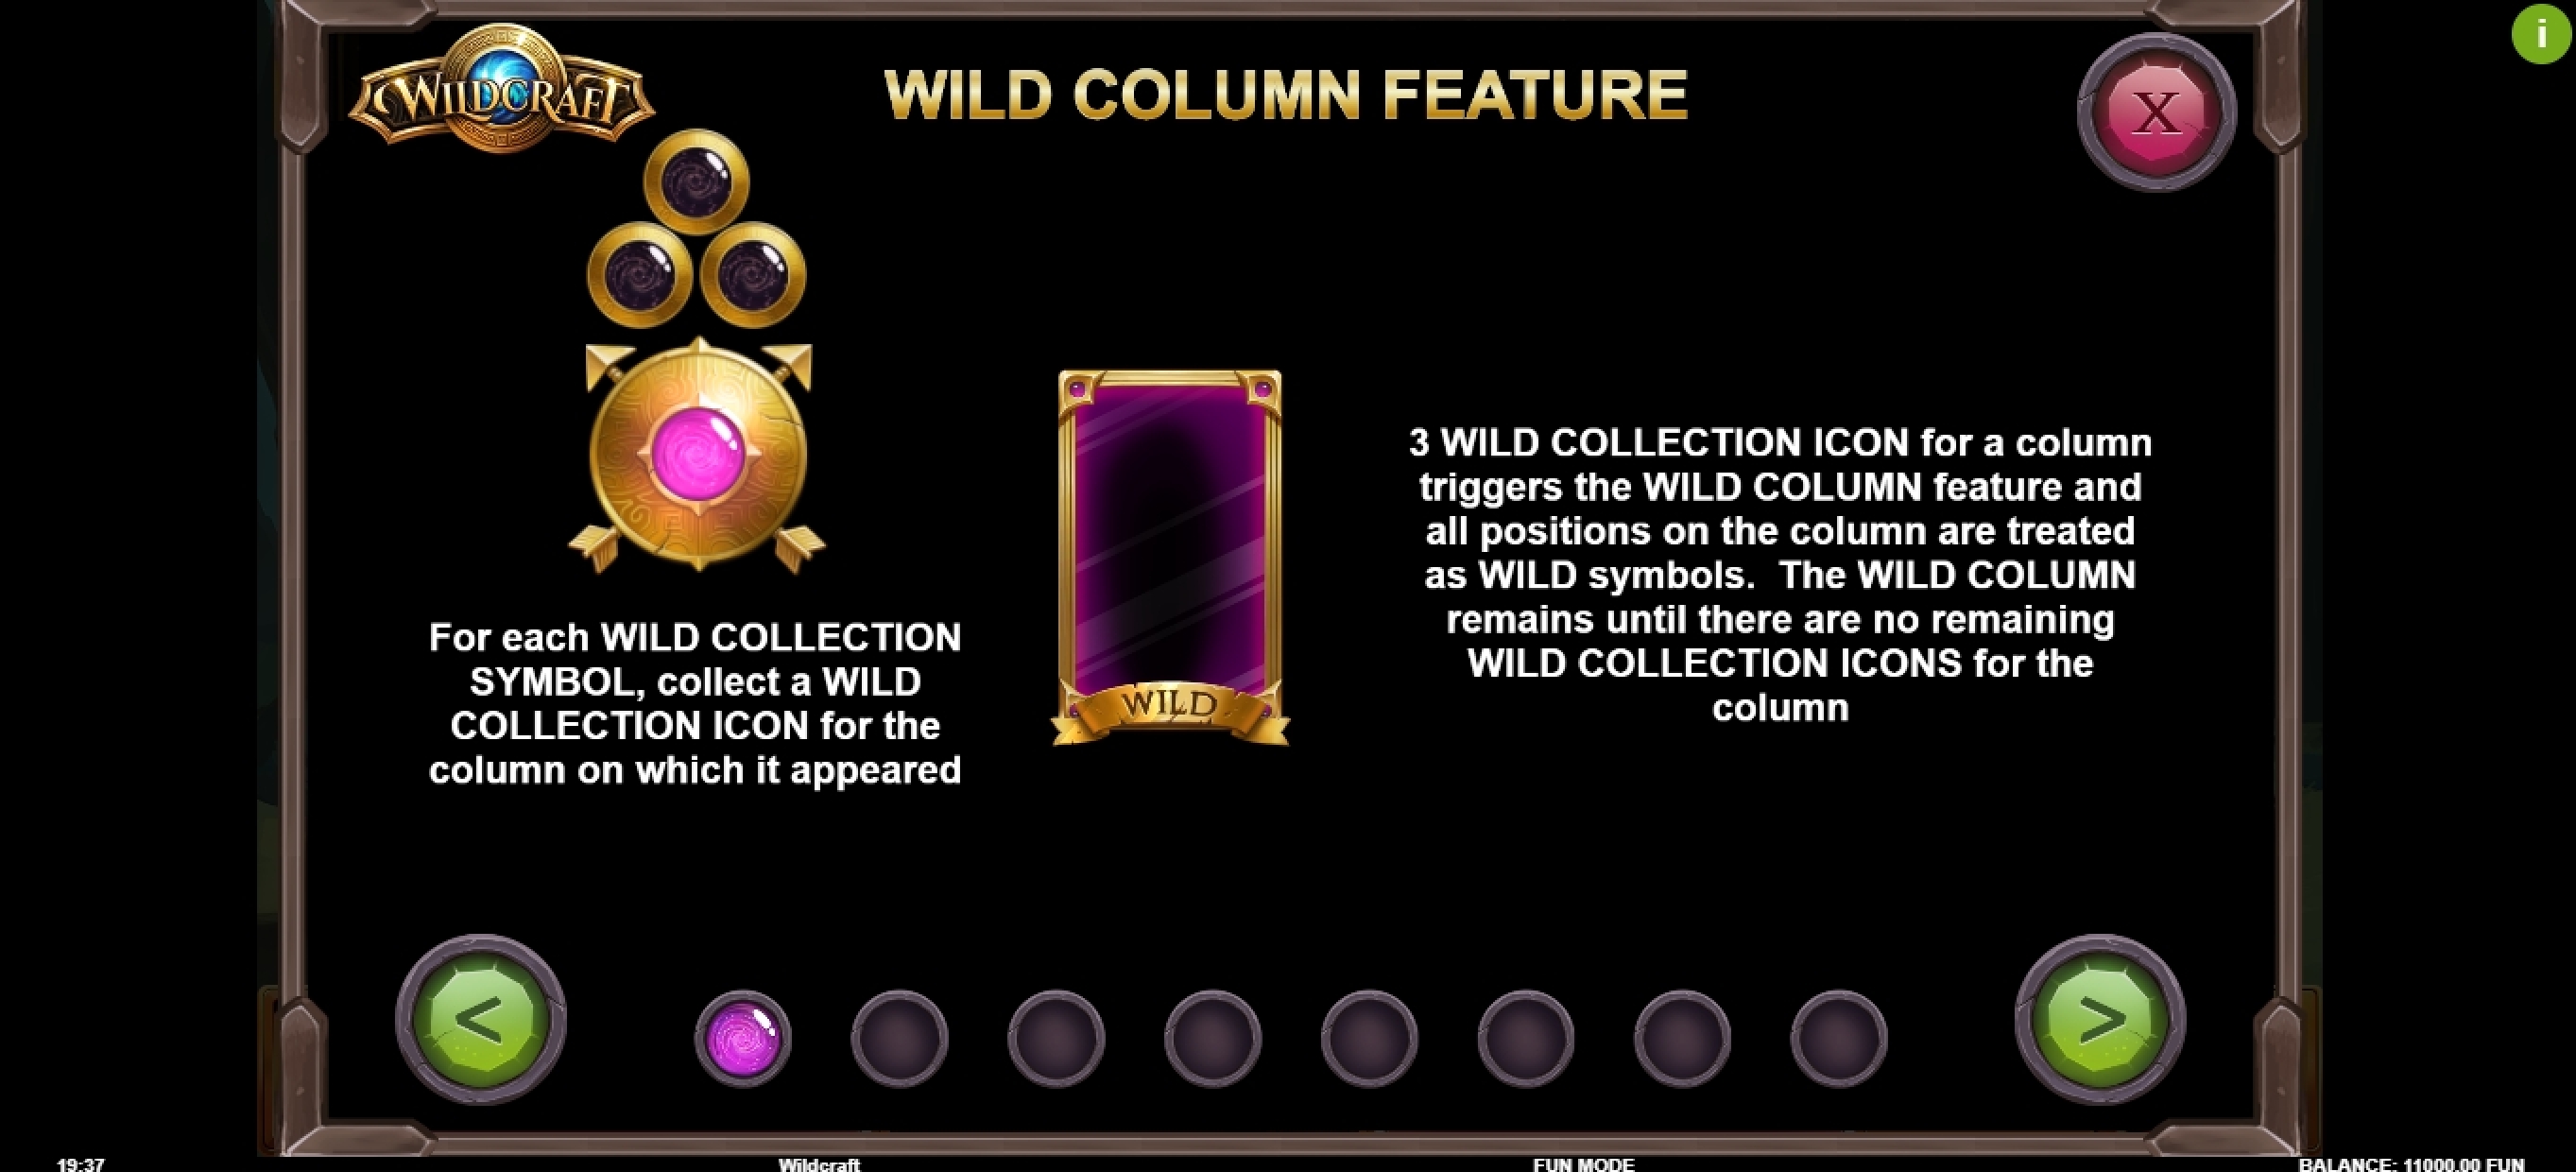 Info of Wildcraft Slot Game by Kalamba Games